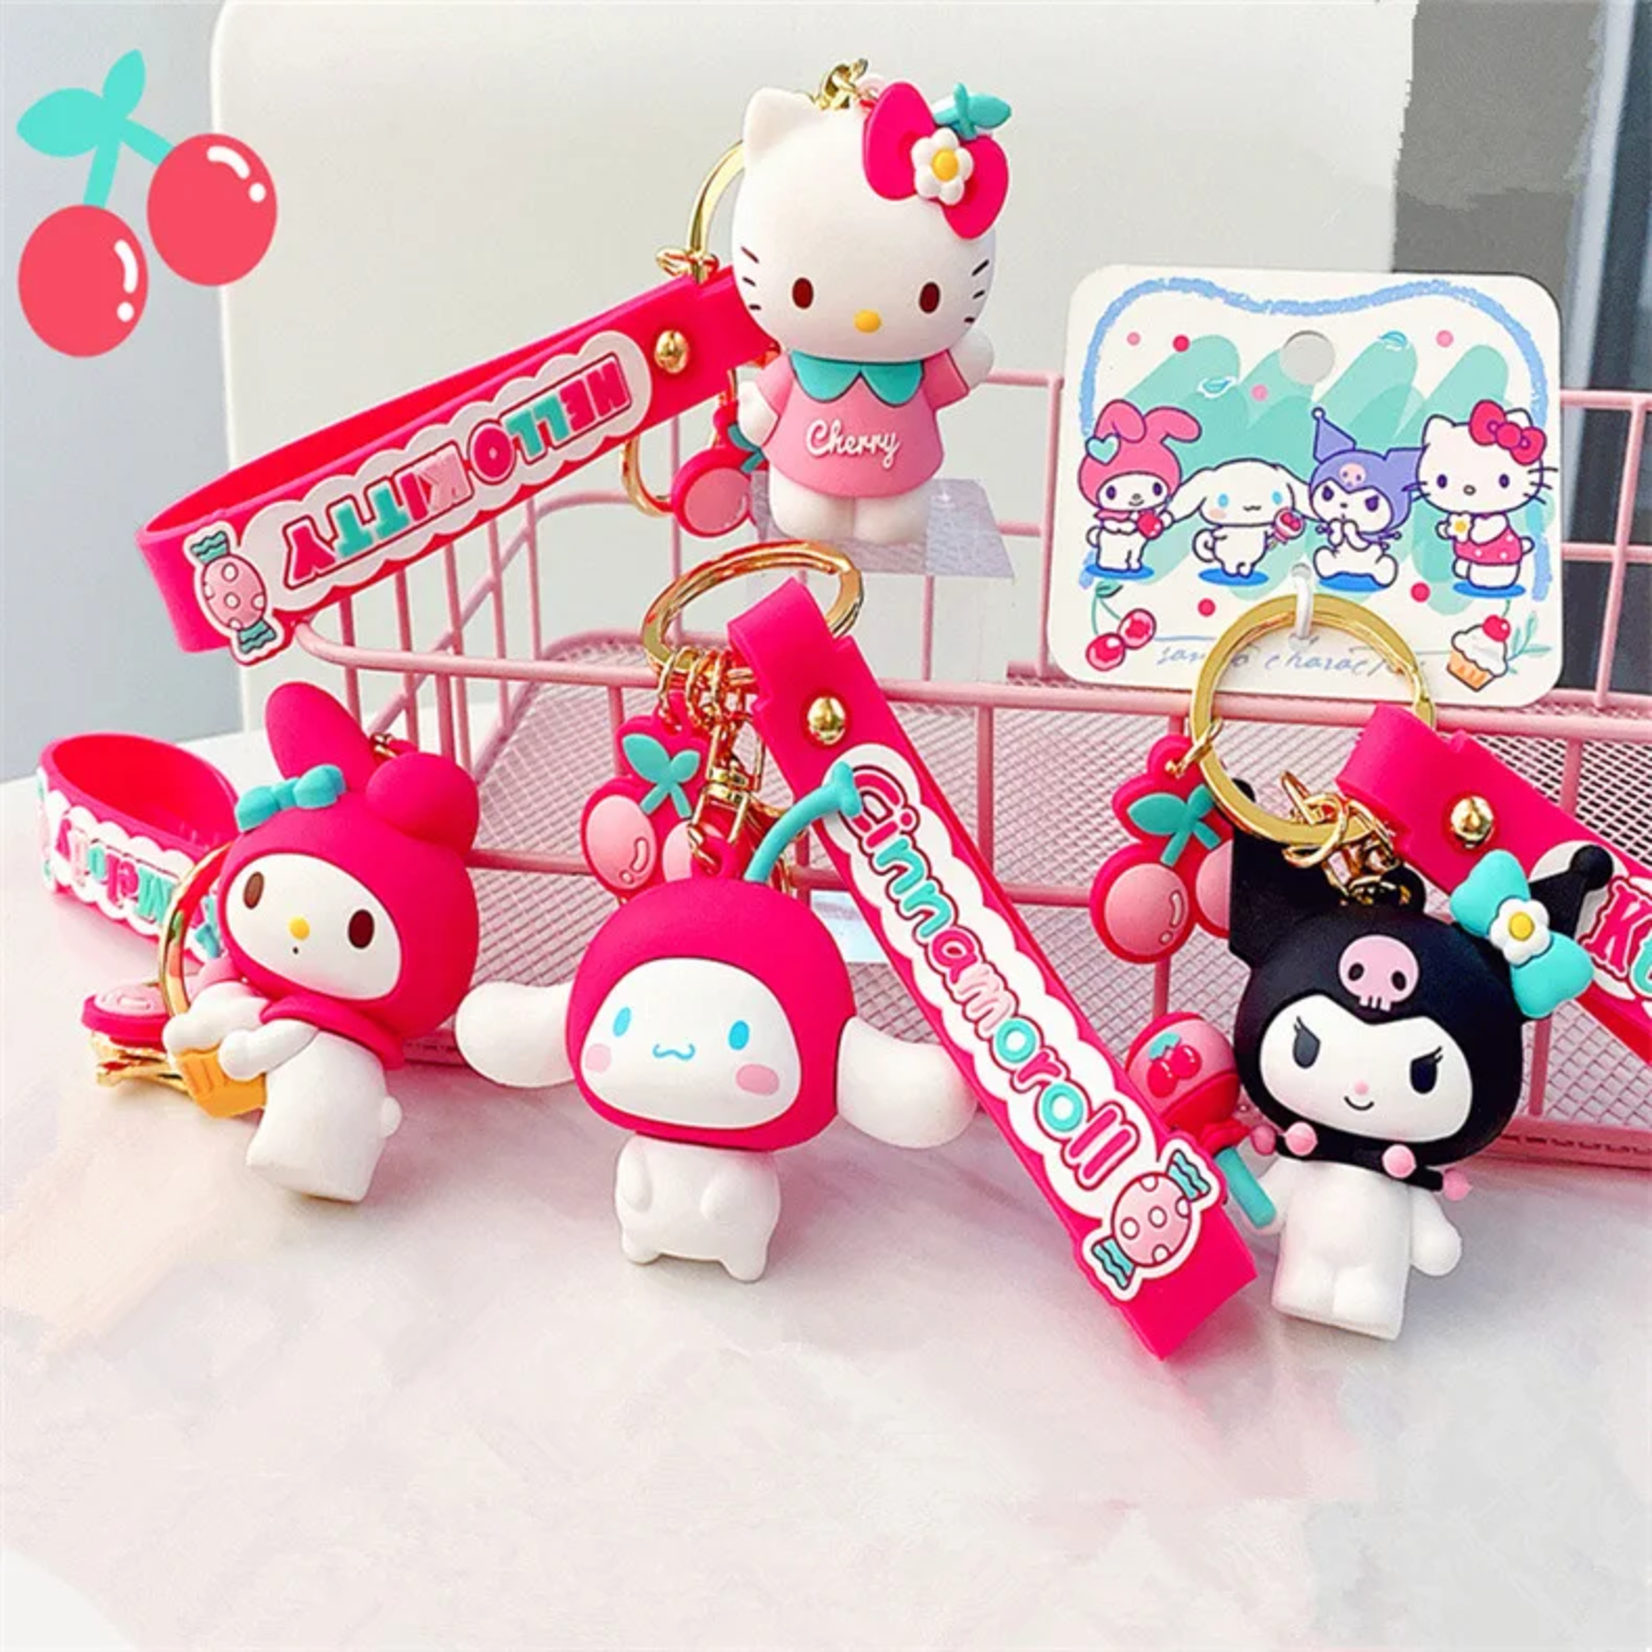 Sanrio And Friends Sweet Cherry Keychain